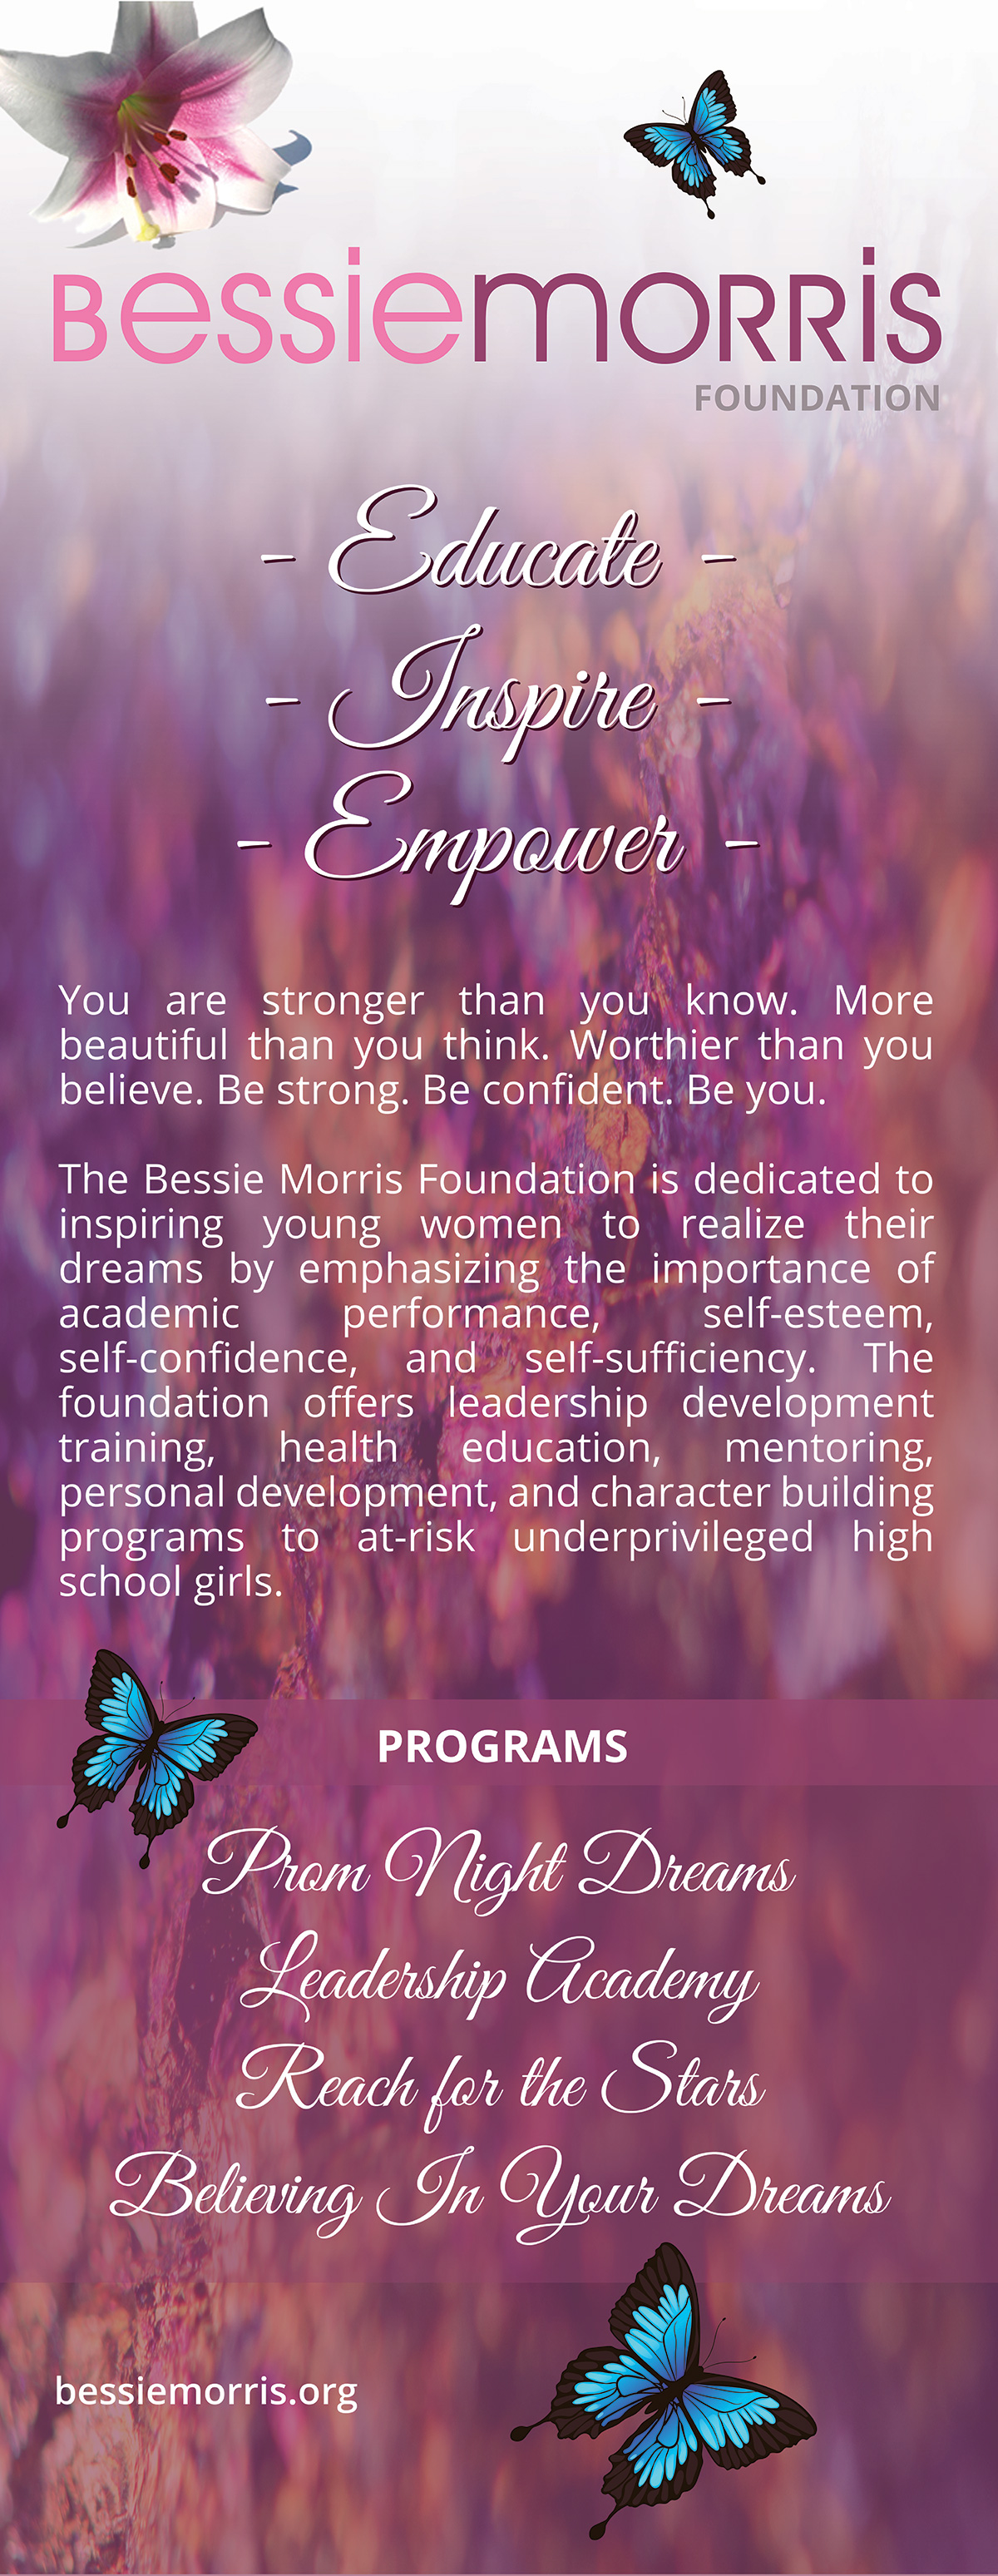 Bessie Morris Foundation community outreach banner